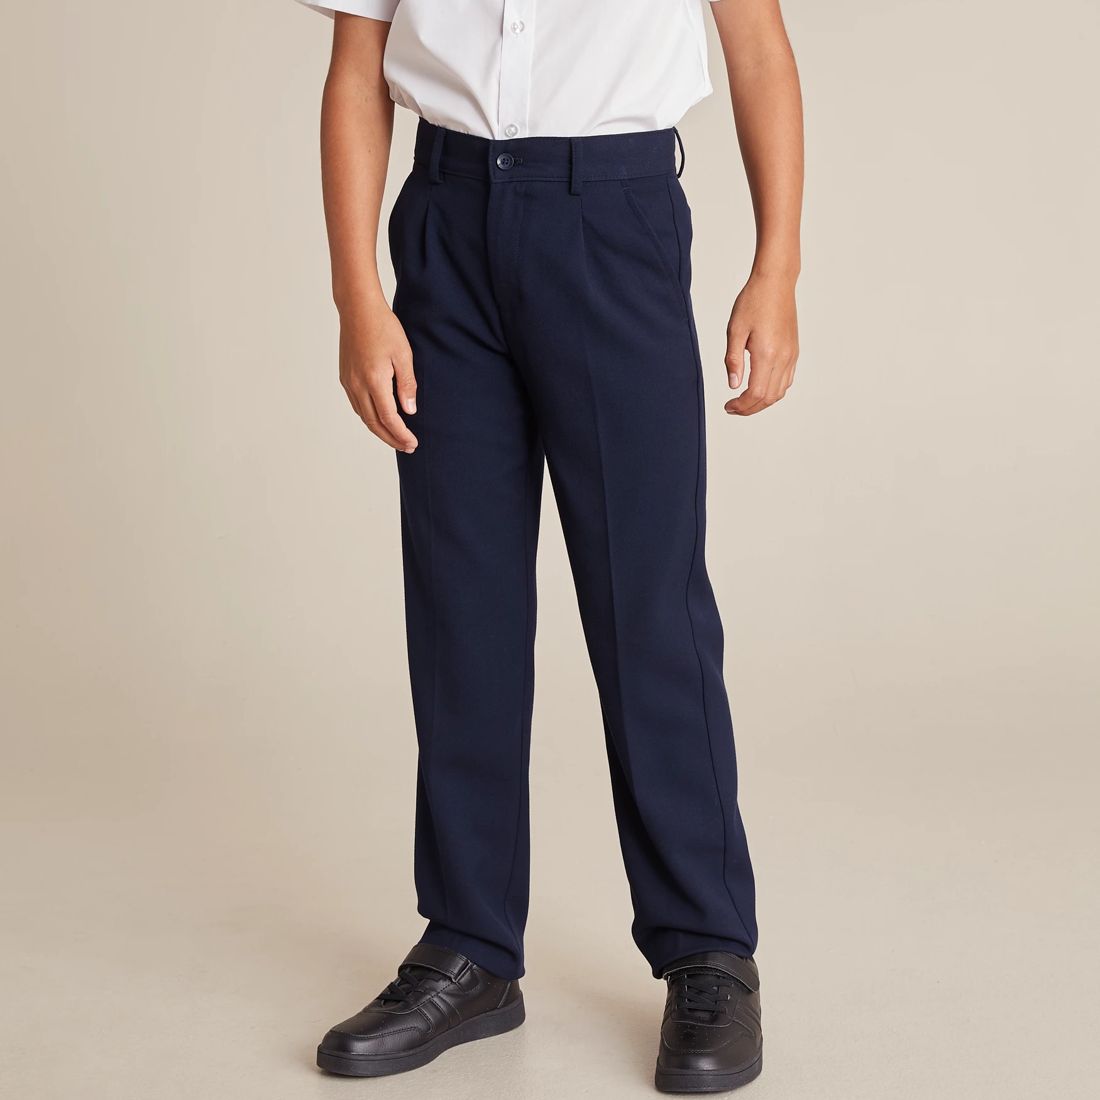 Tailored School Pants | Target Australia